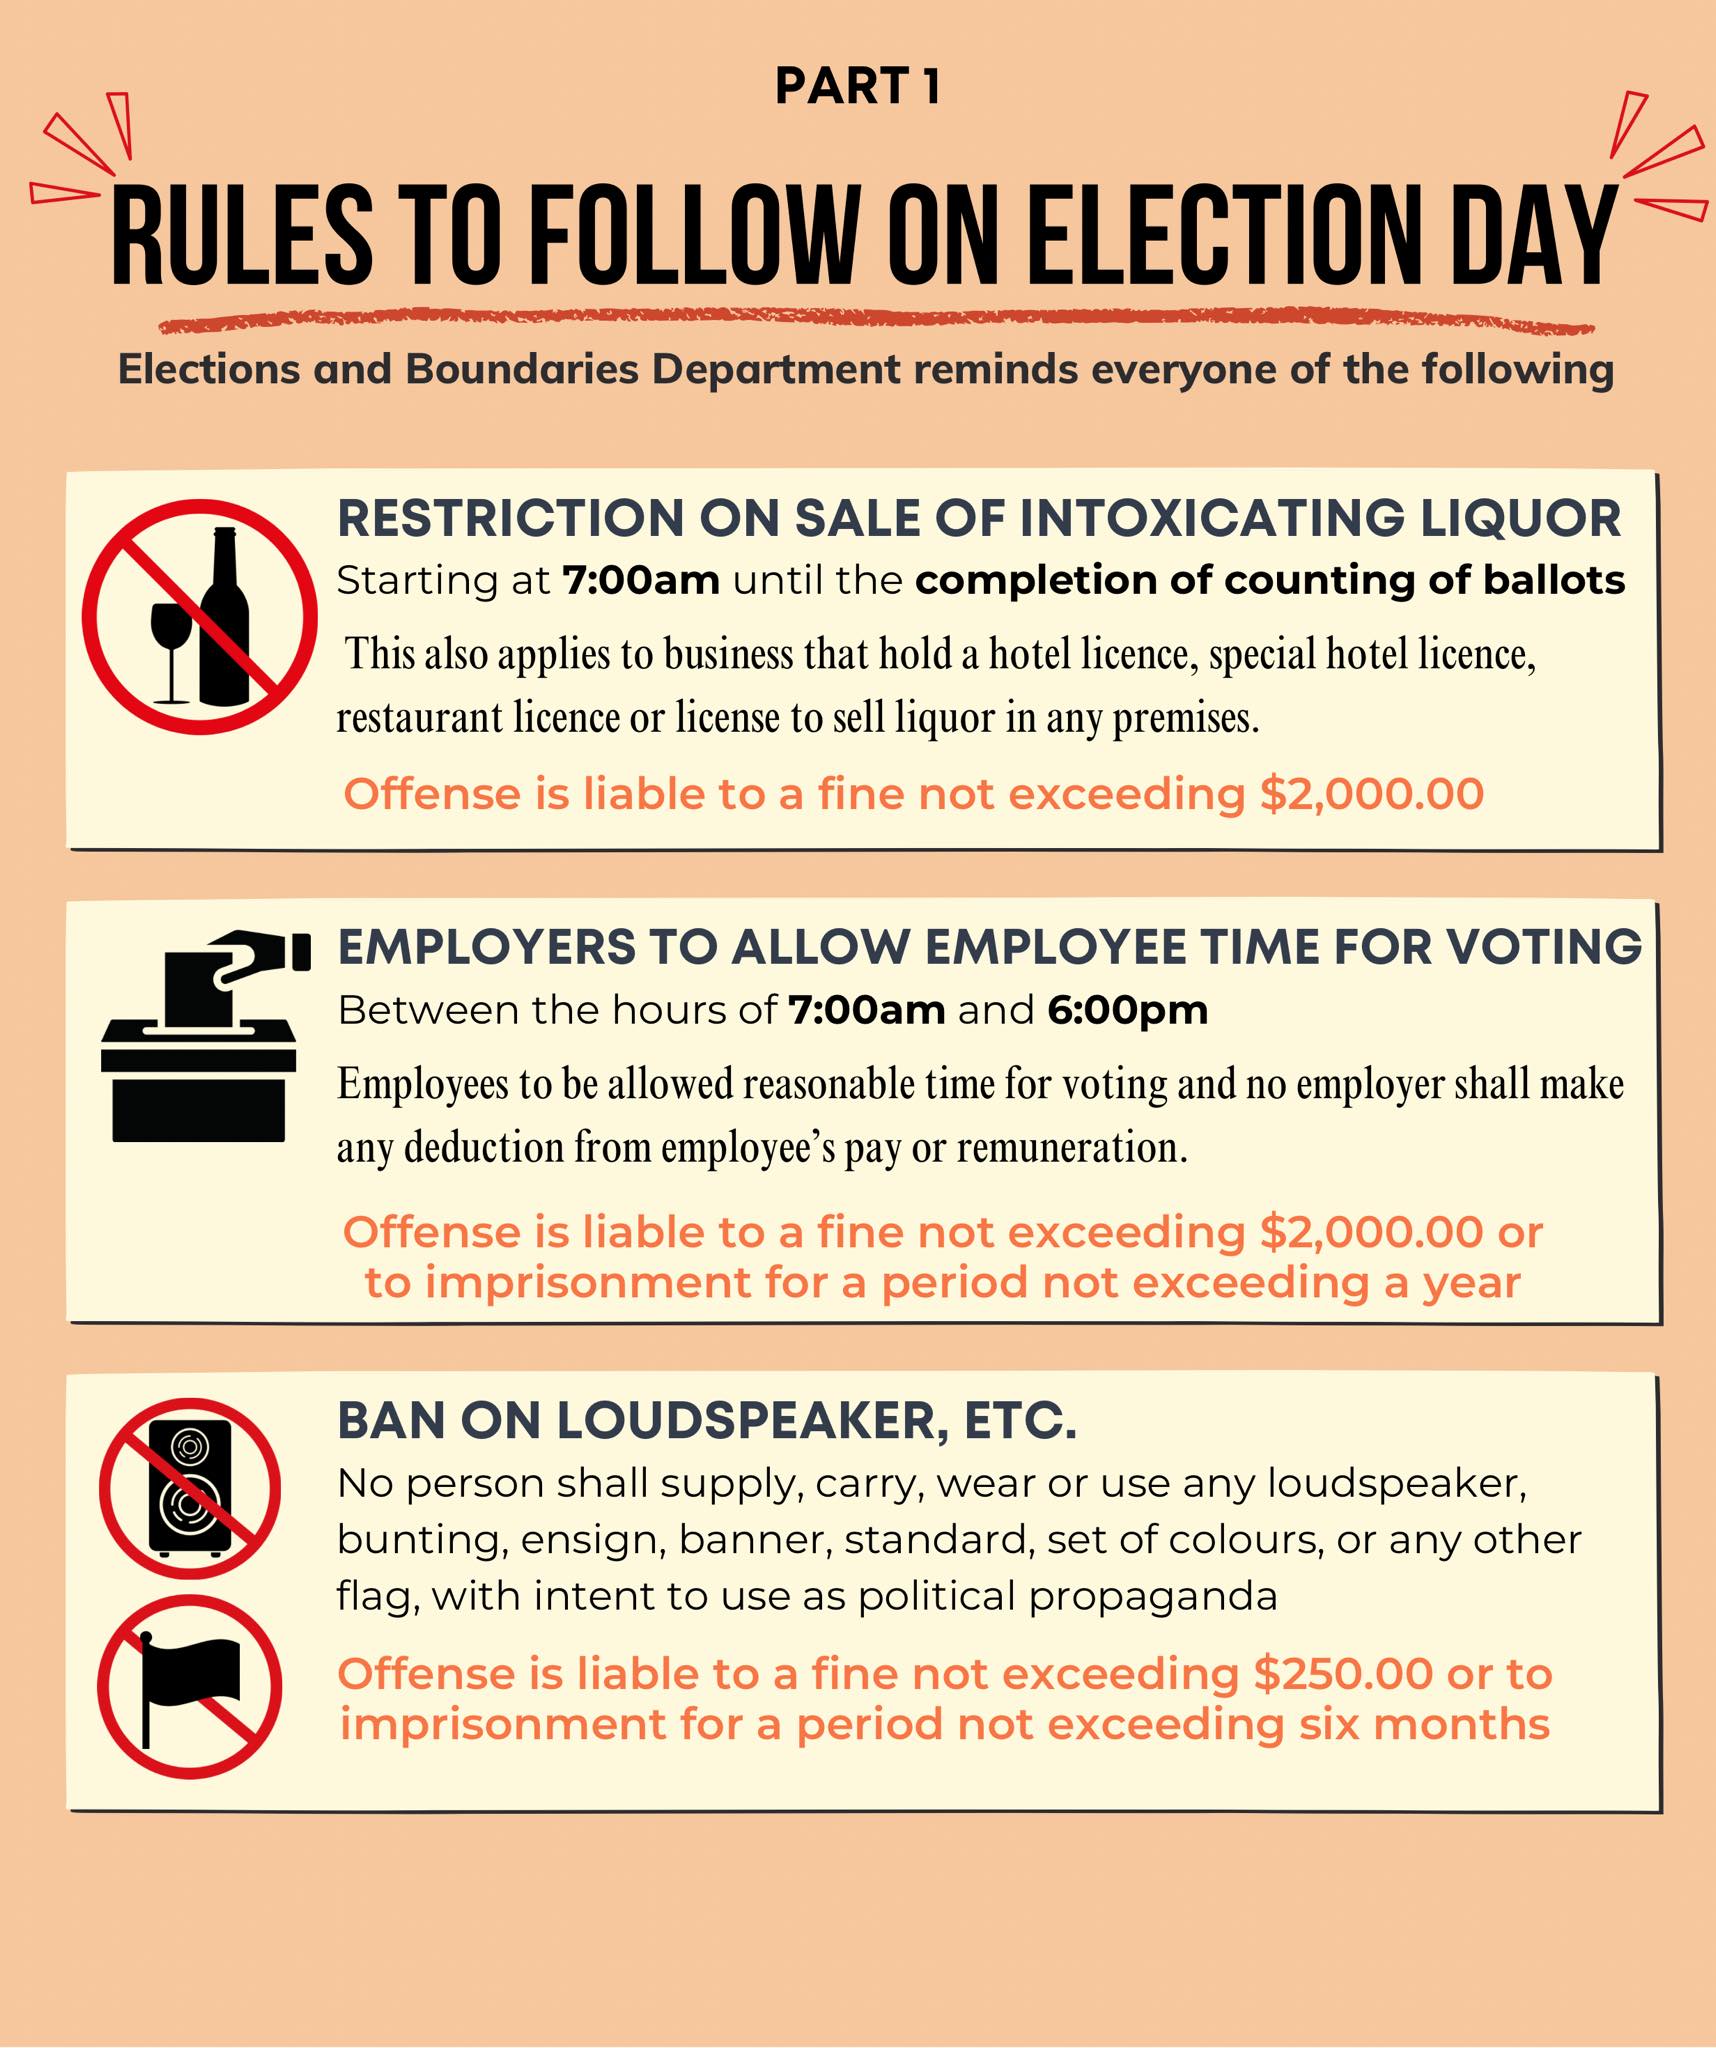 No liquor on Election Day